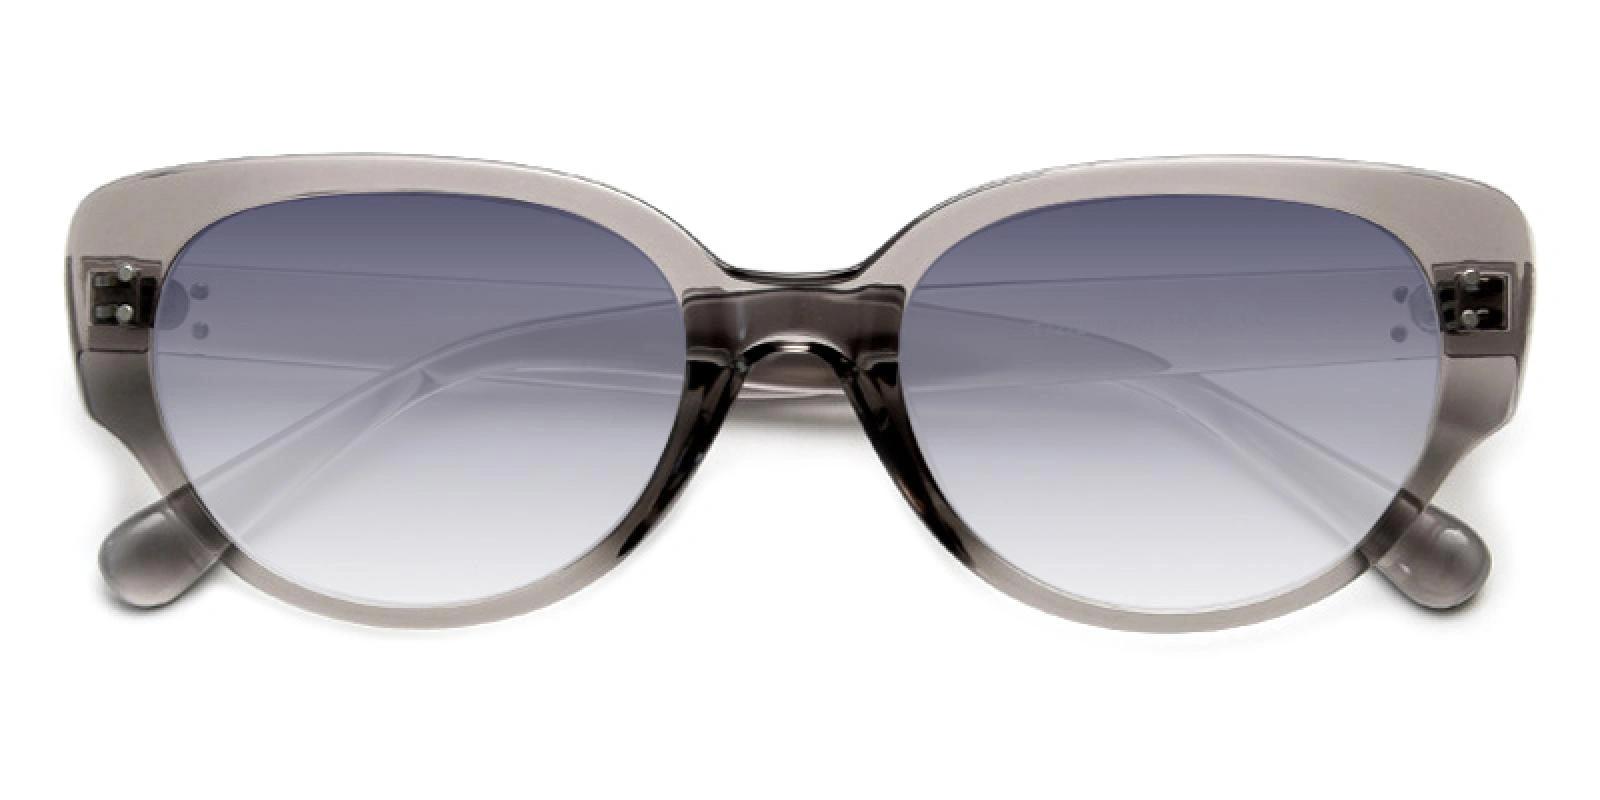 Steptic Gray Acetate Sunglasses , UniversalBridgeFit Frames from ABBE Glasses